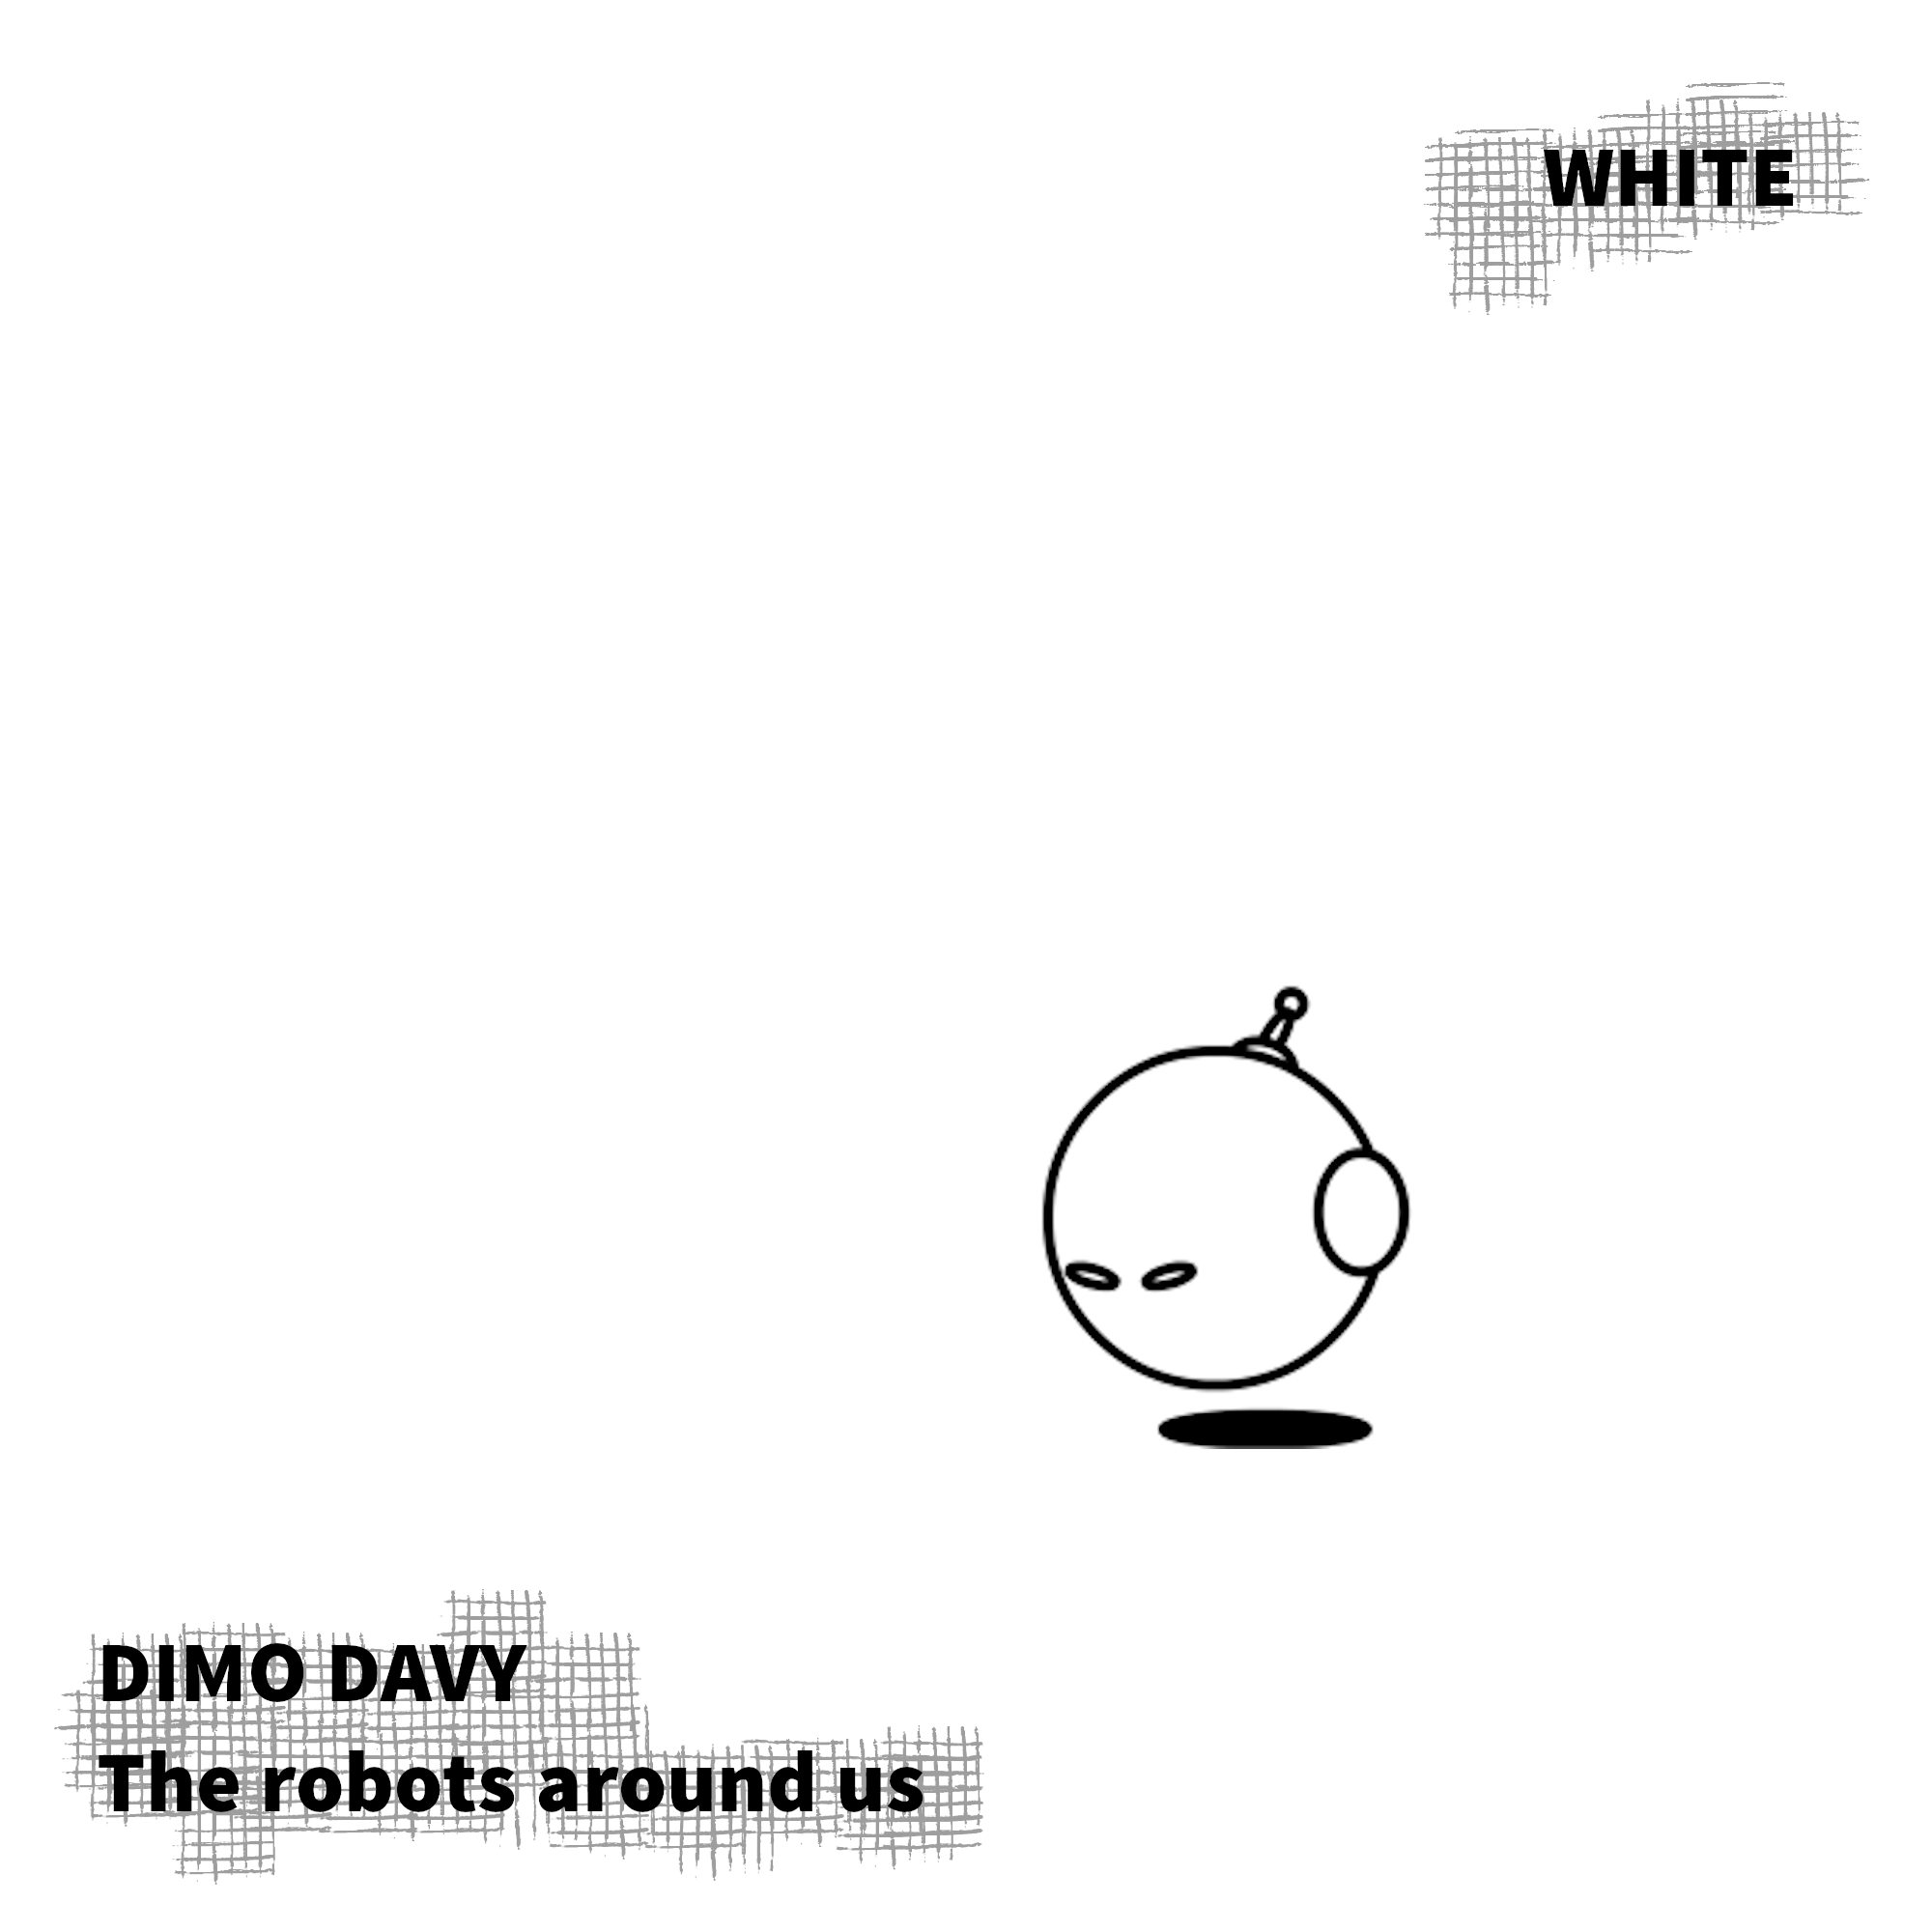 The robots around us